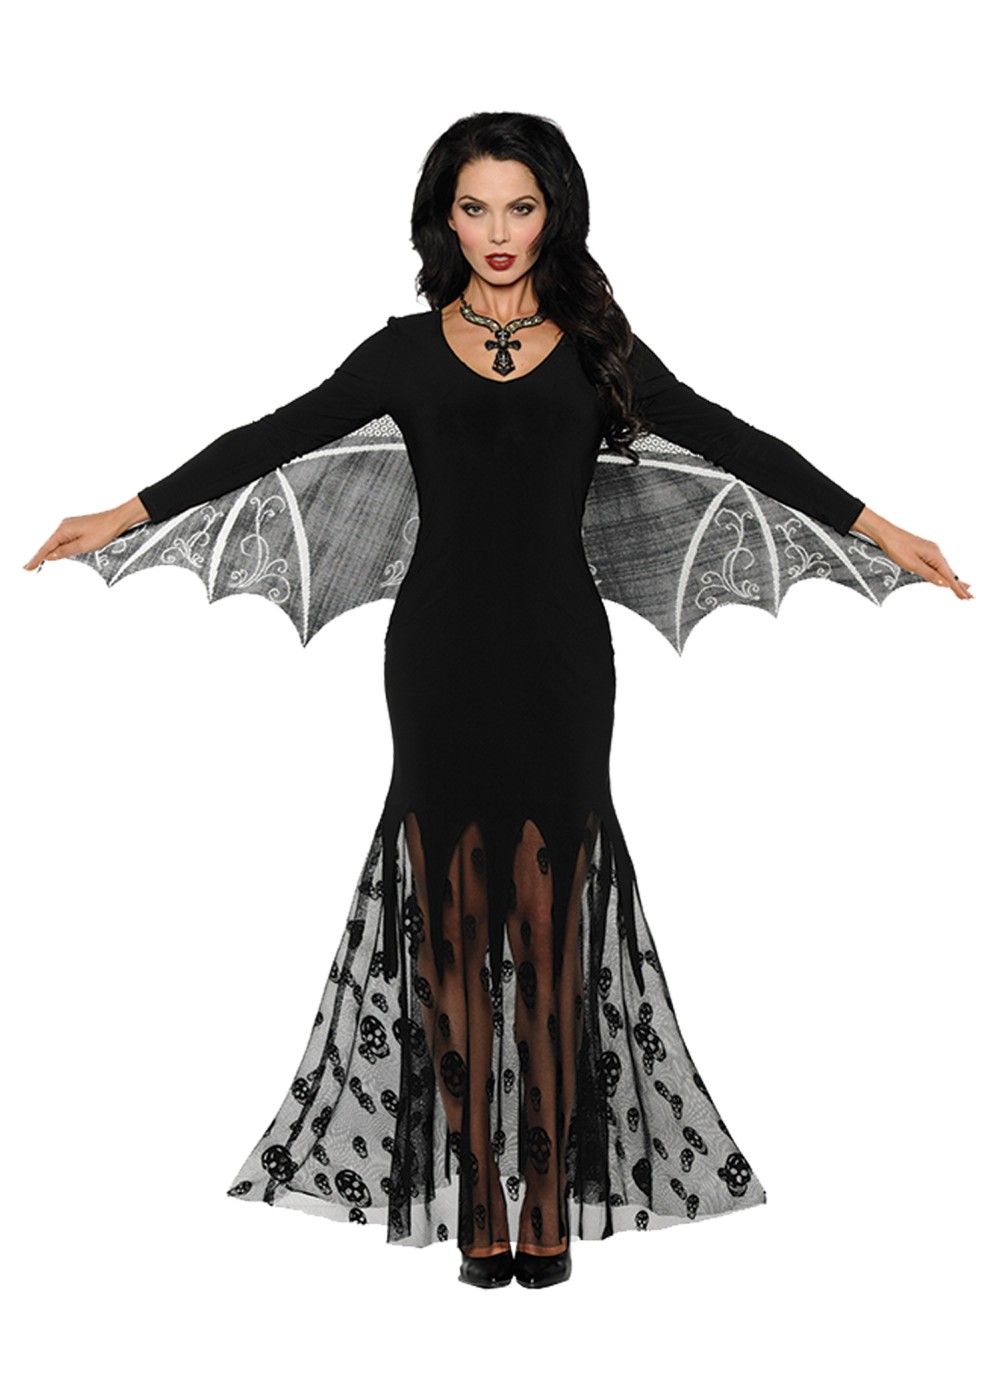 Vampiress Woman Halloween Costume